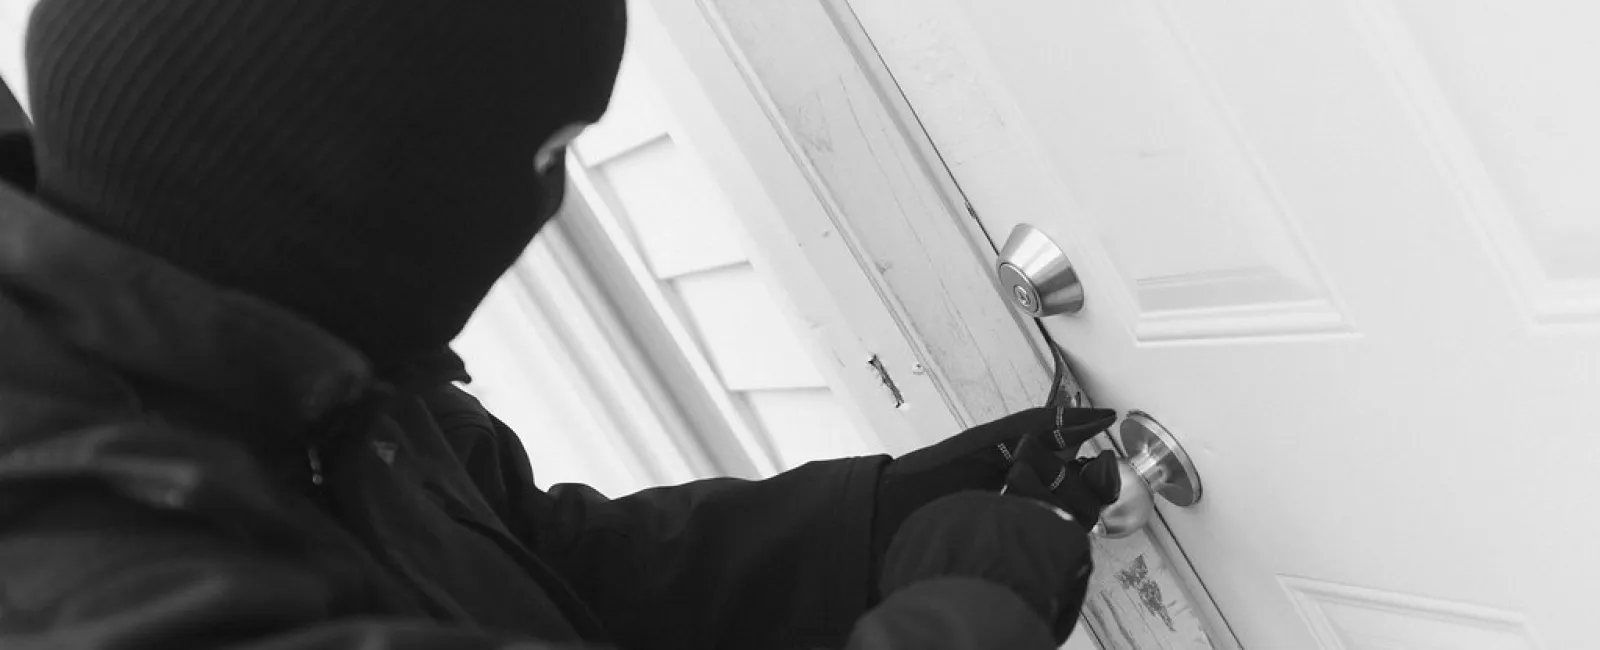 Steps Every Atlanta Homeowner Should Take to Deter Burglars at Night